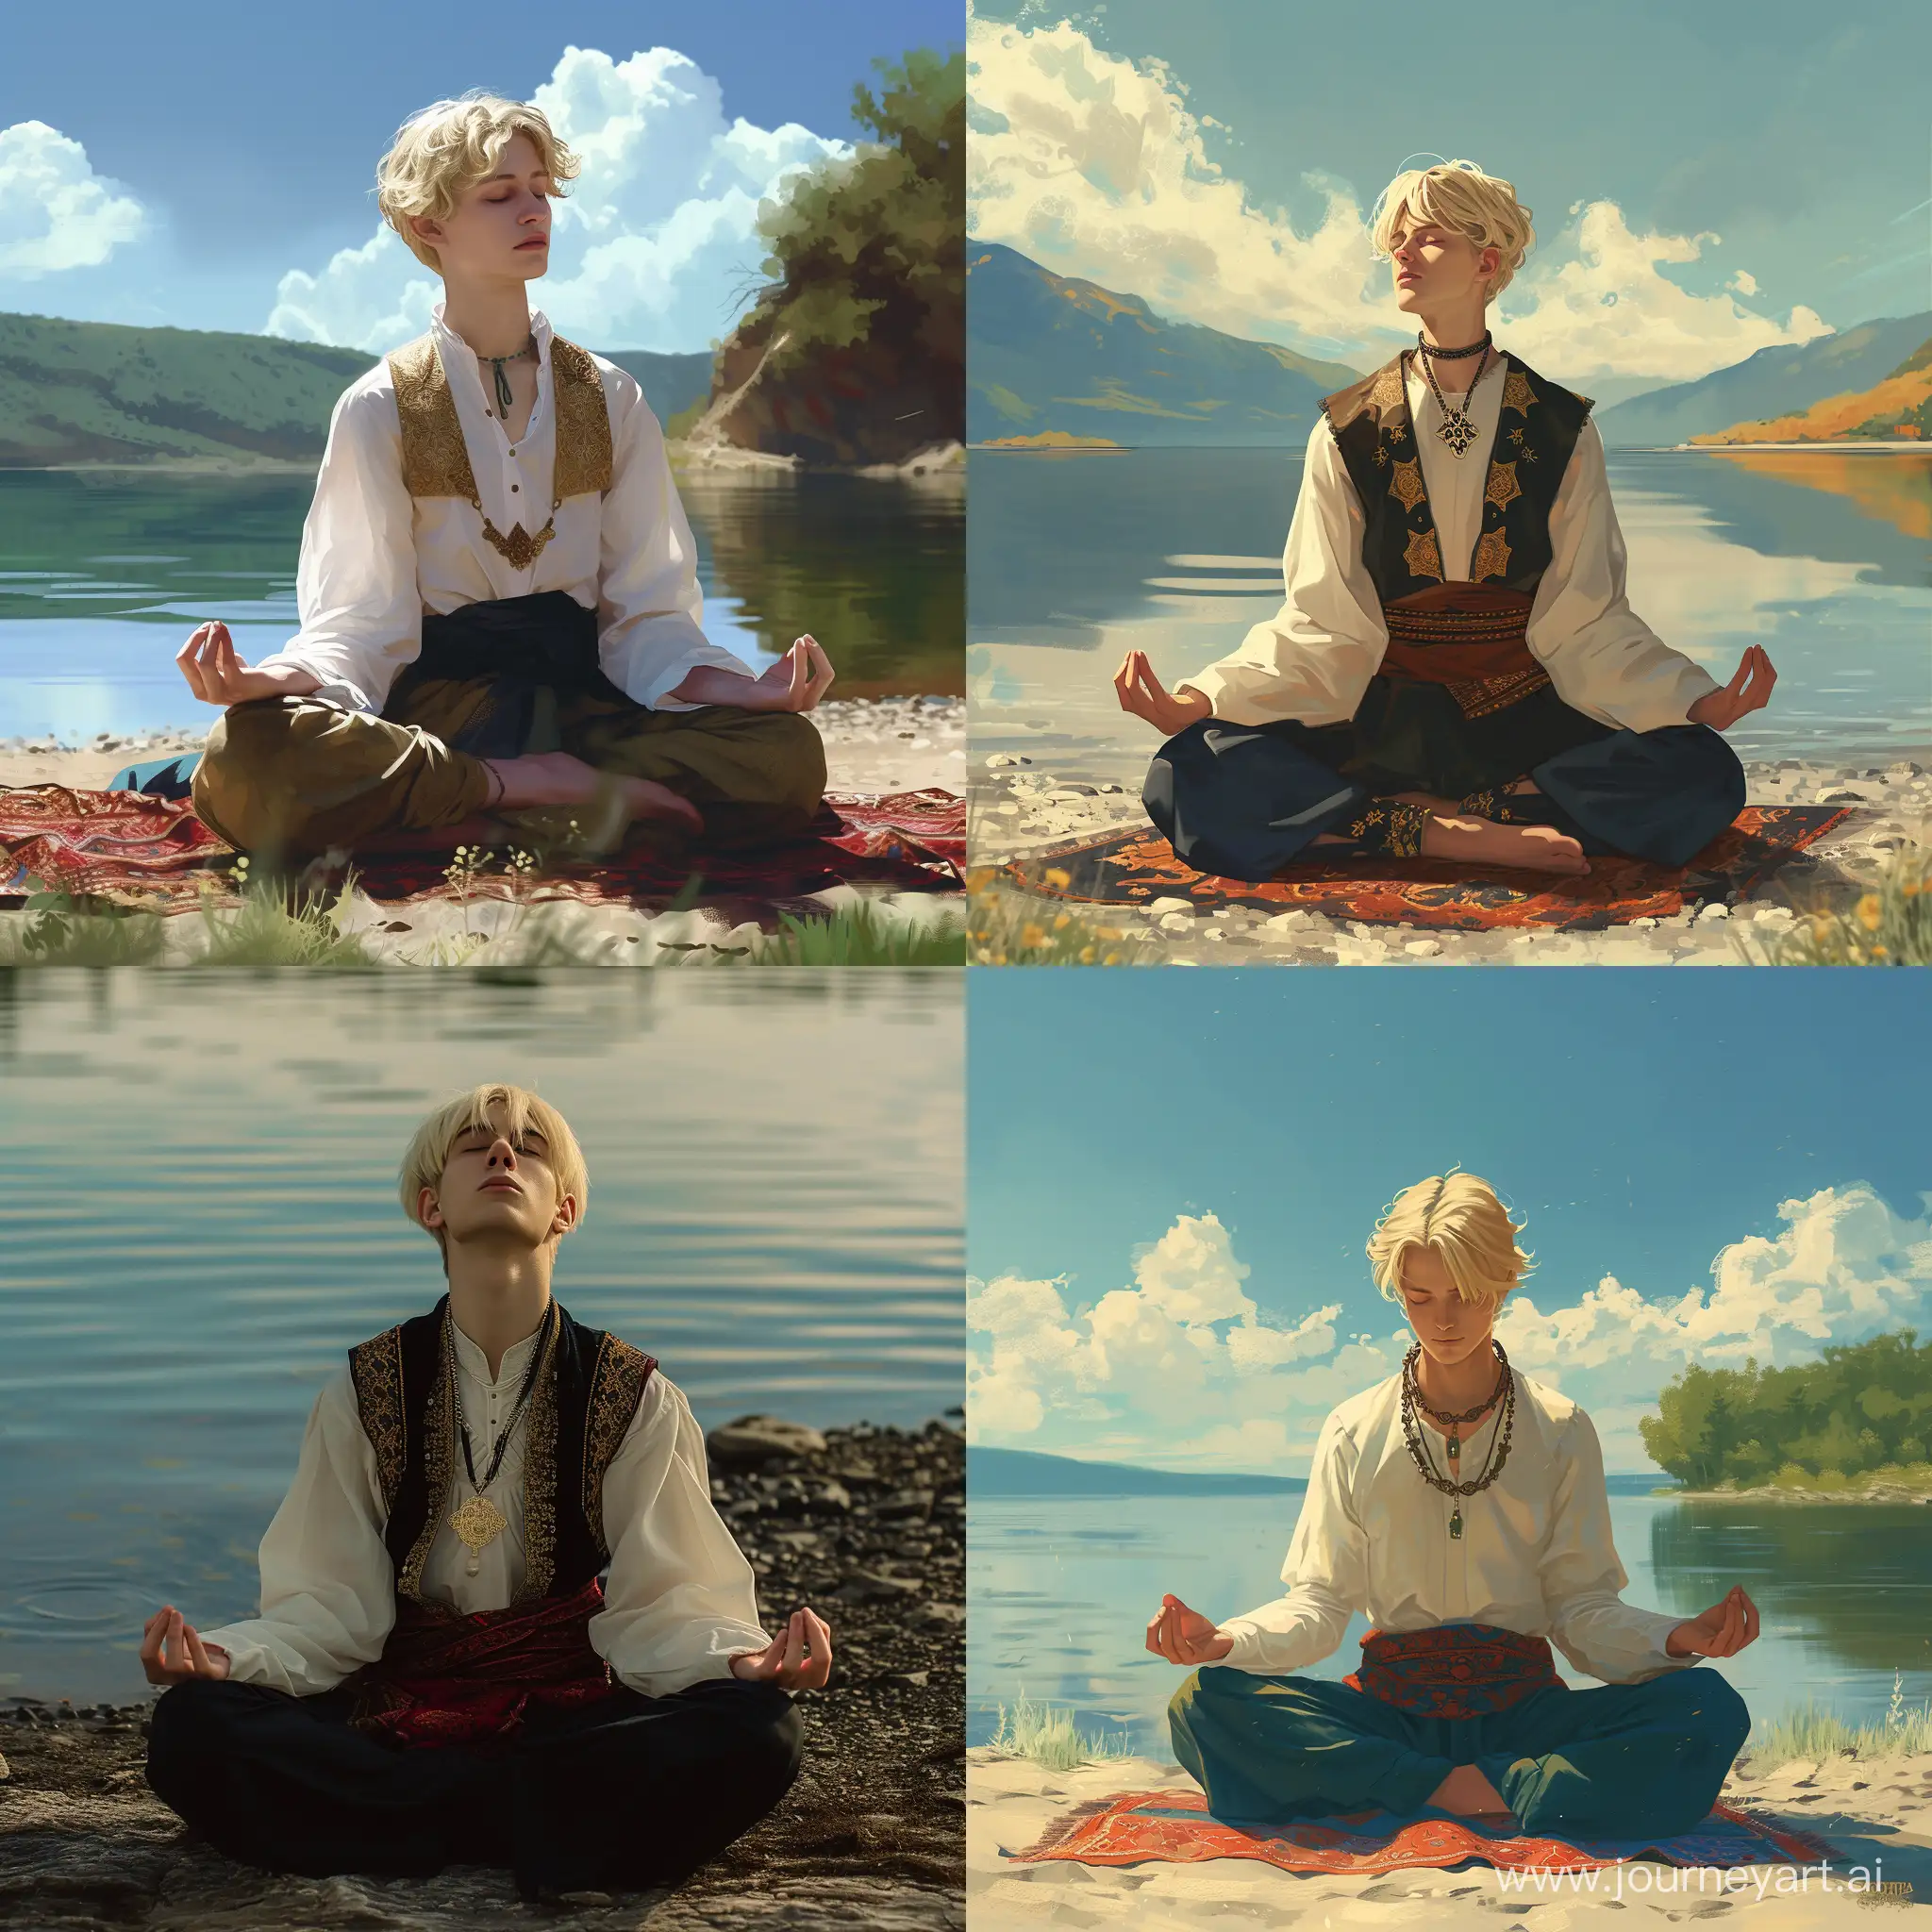 Serene-European-Blonde-Youth-Meditating-by-the-Vaporwave-Lake